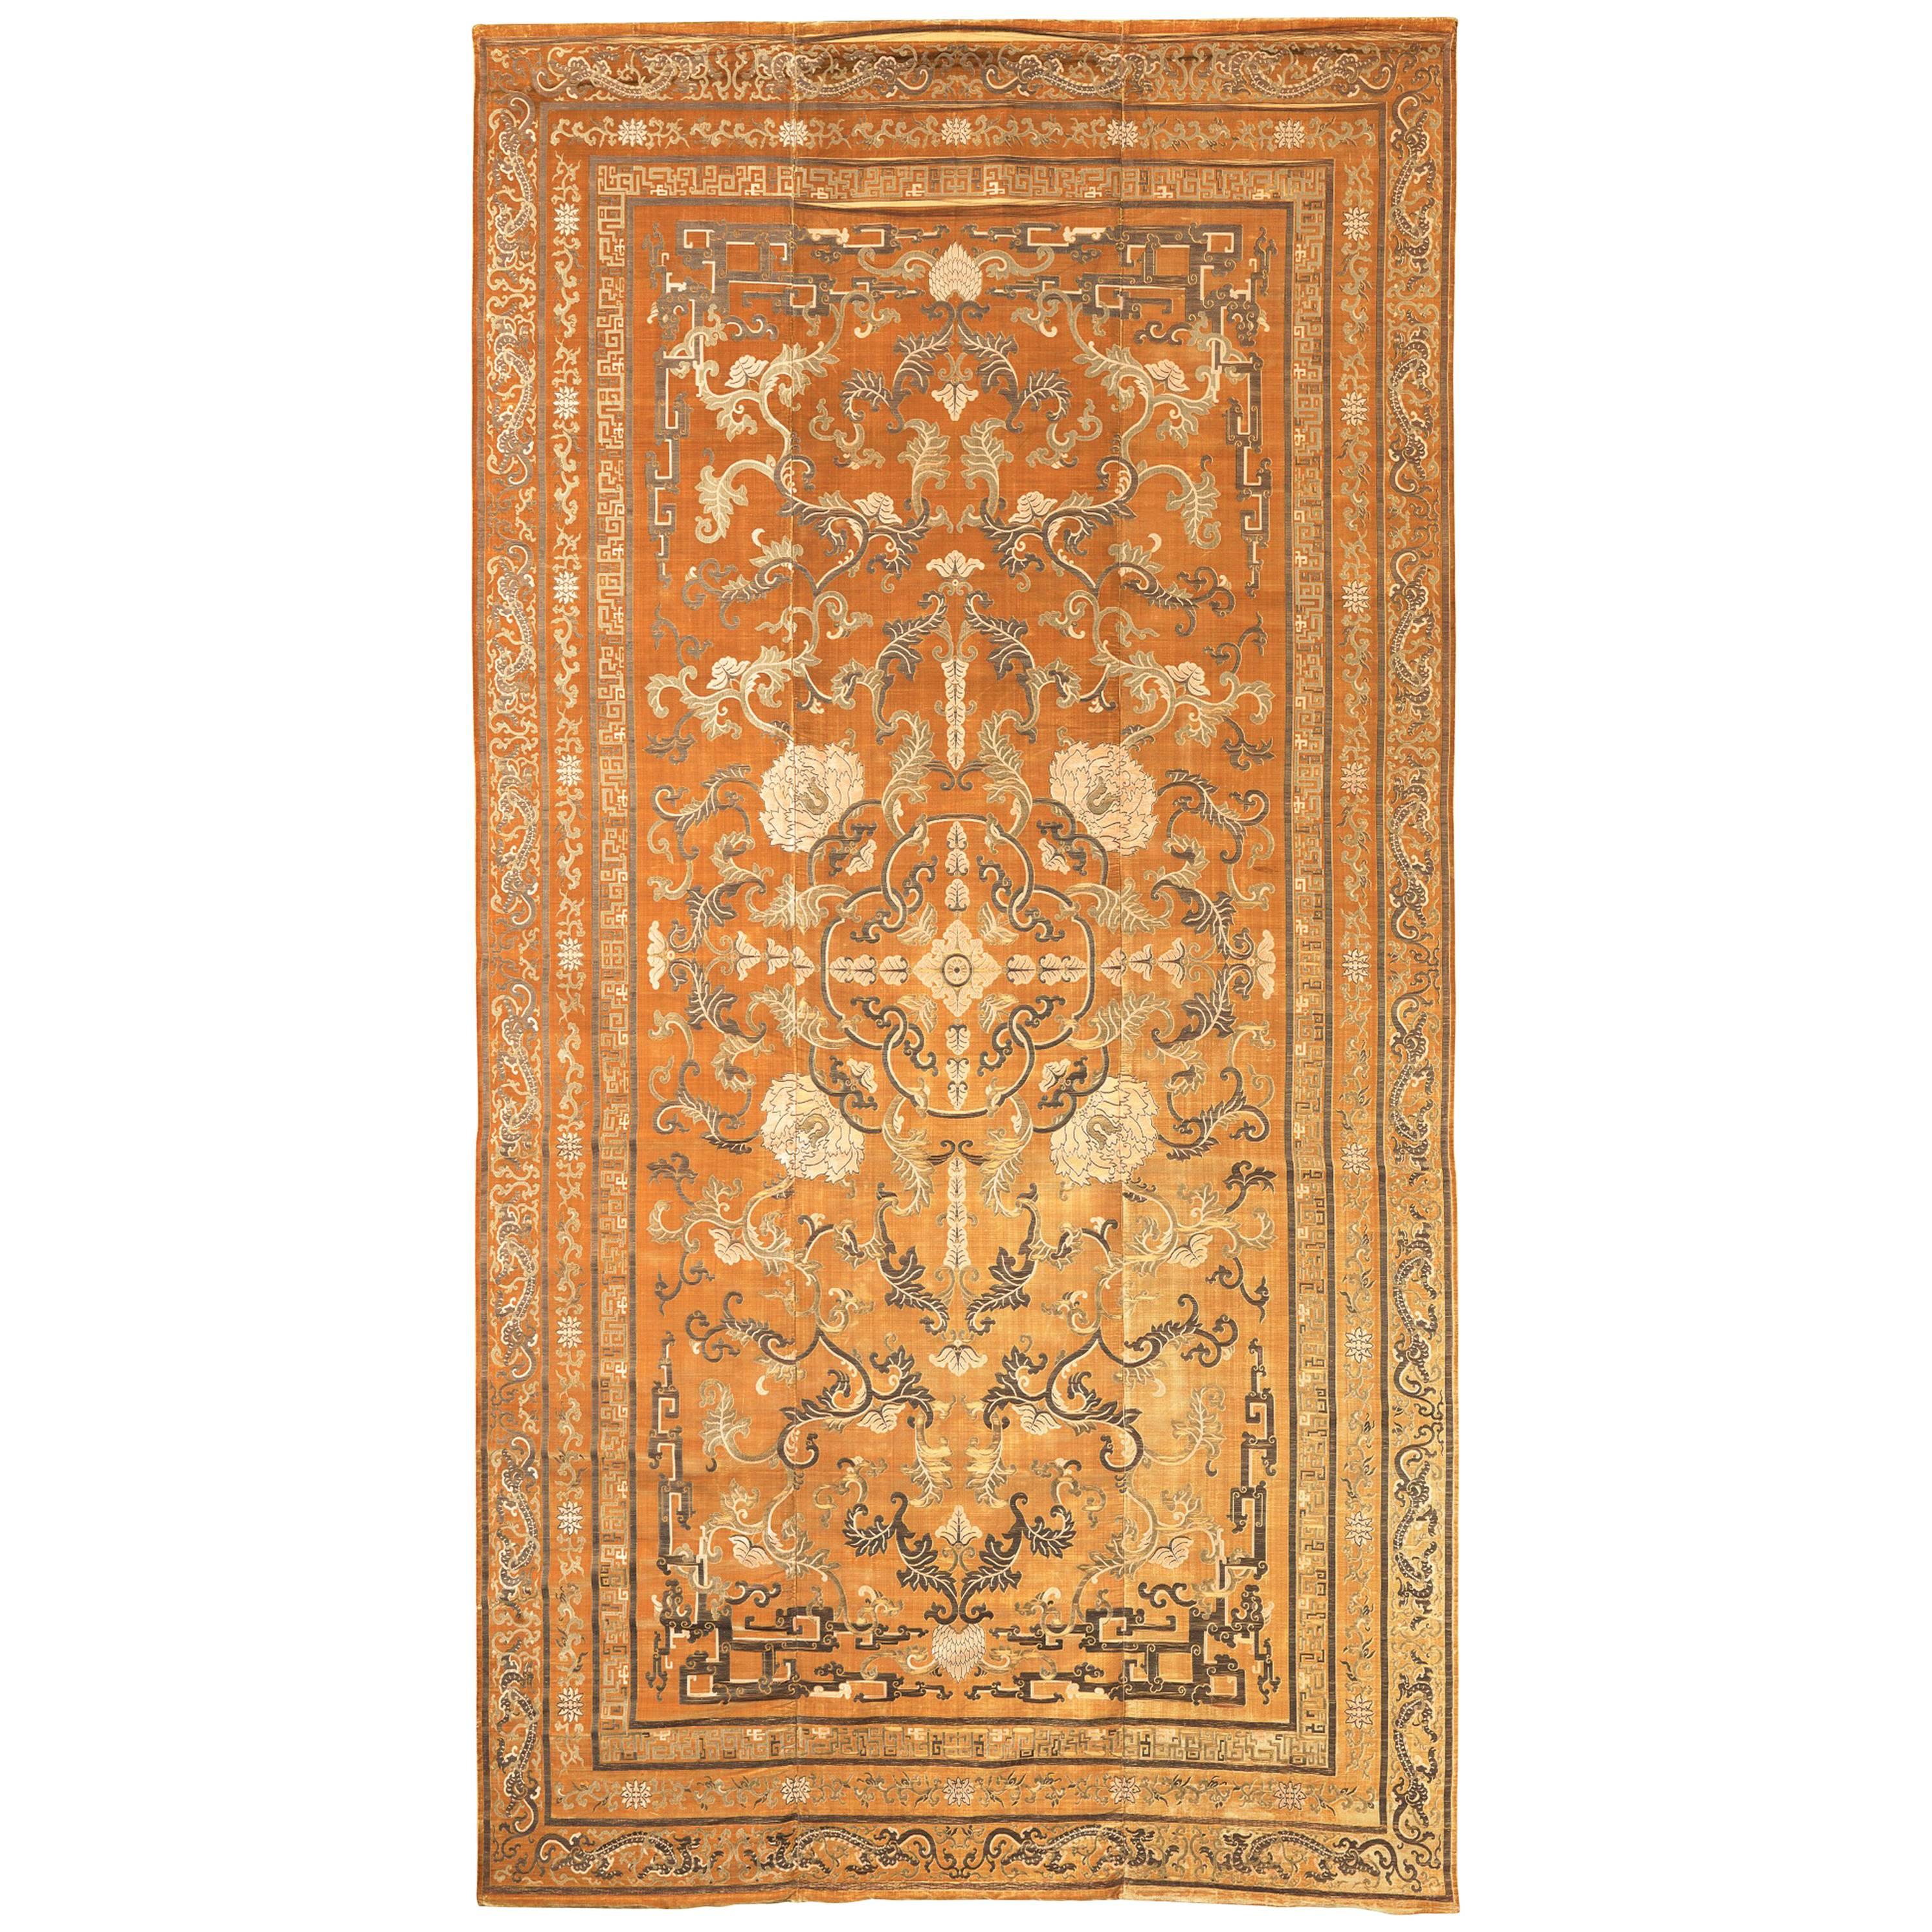 Imperial Cut Silk Velvet and Metal-Thread Kang Carpet For Sale